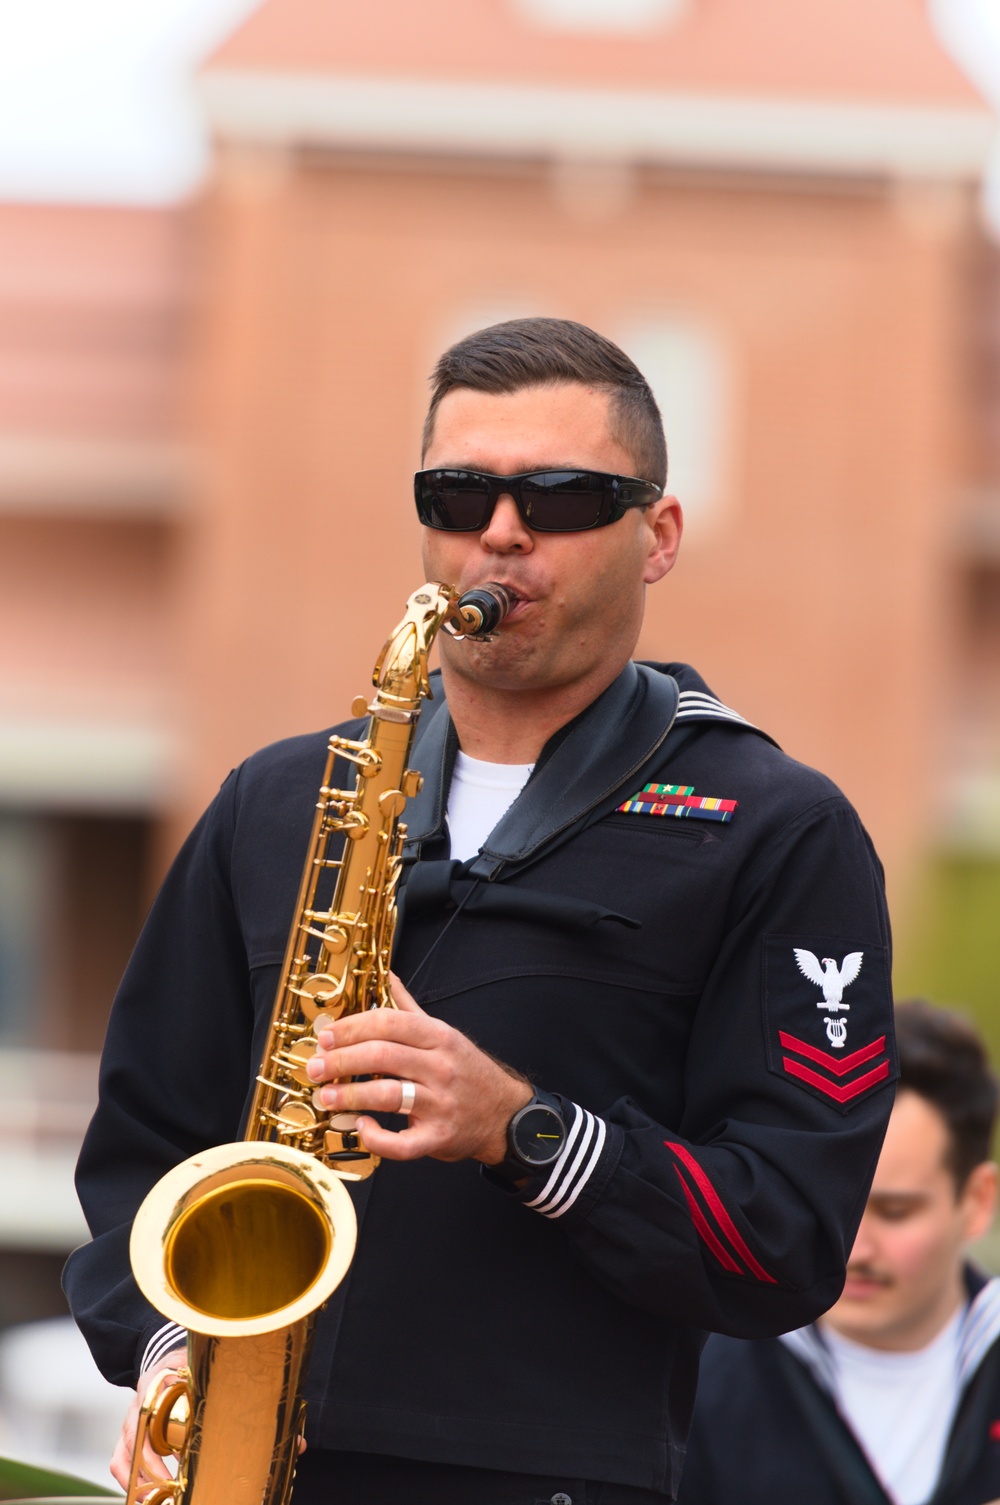 Navy Band Southwest at Navy Week Tucson